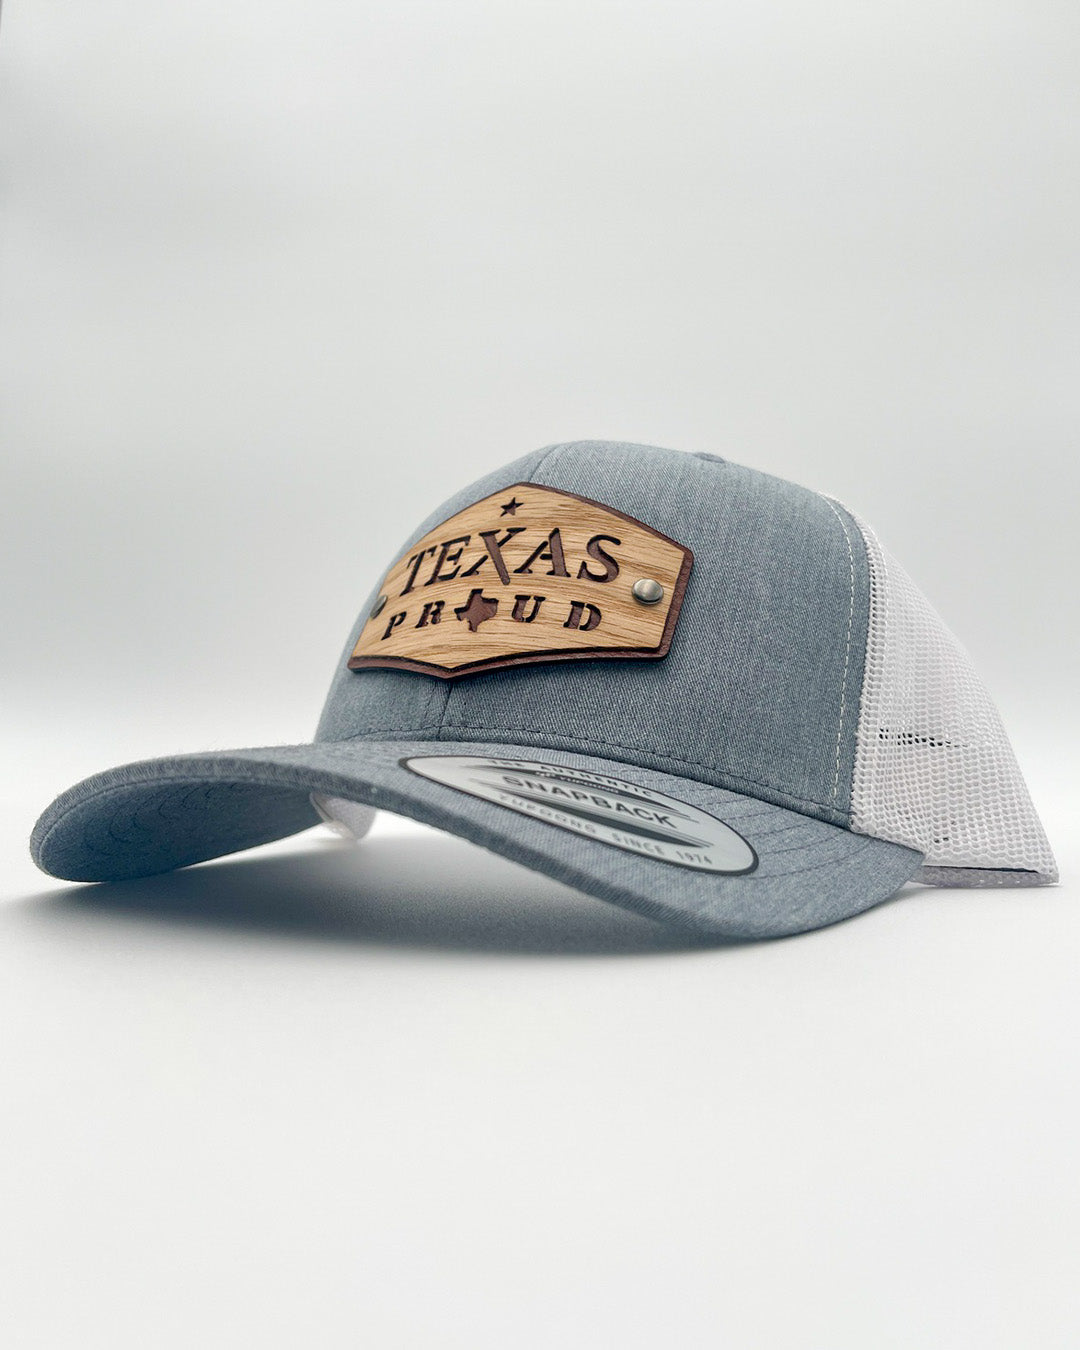 Cheap Custom Hats Original Texas Proud Edition Real Wood & Leather Patch Hat Retro Trucker Mesh Cap Yupoong FlexFit Hats